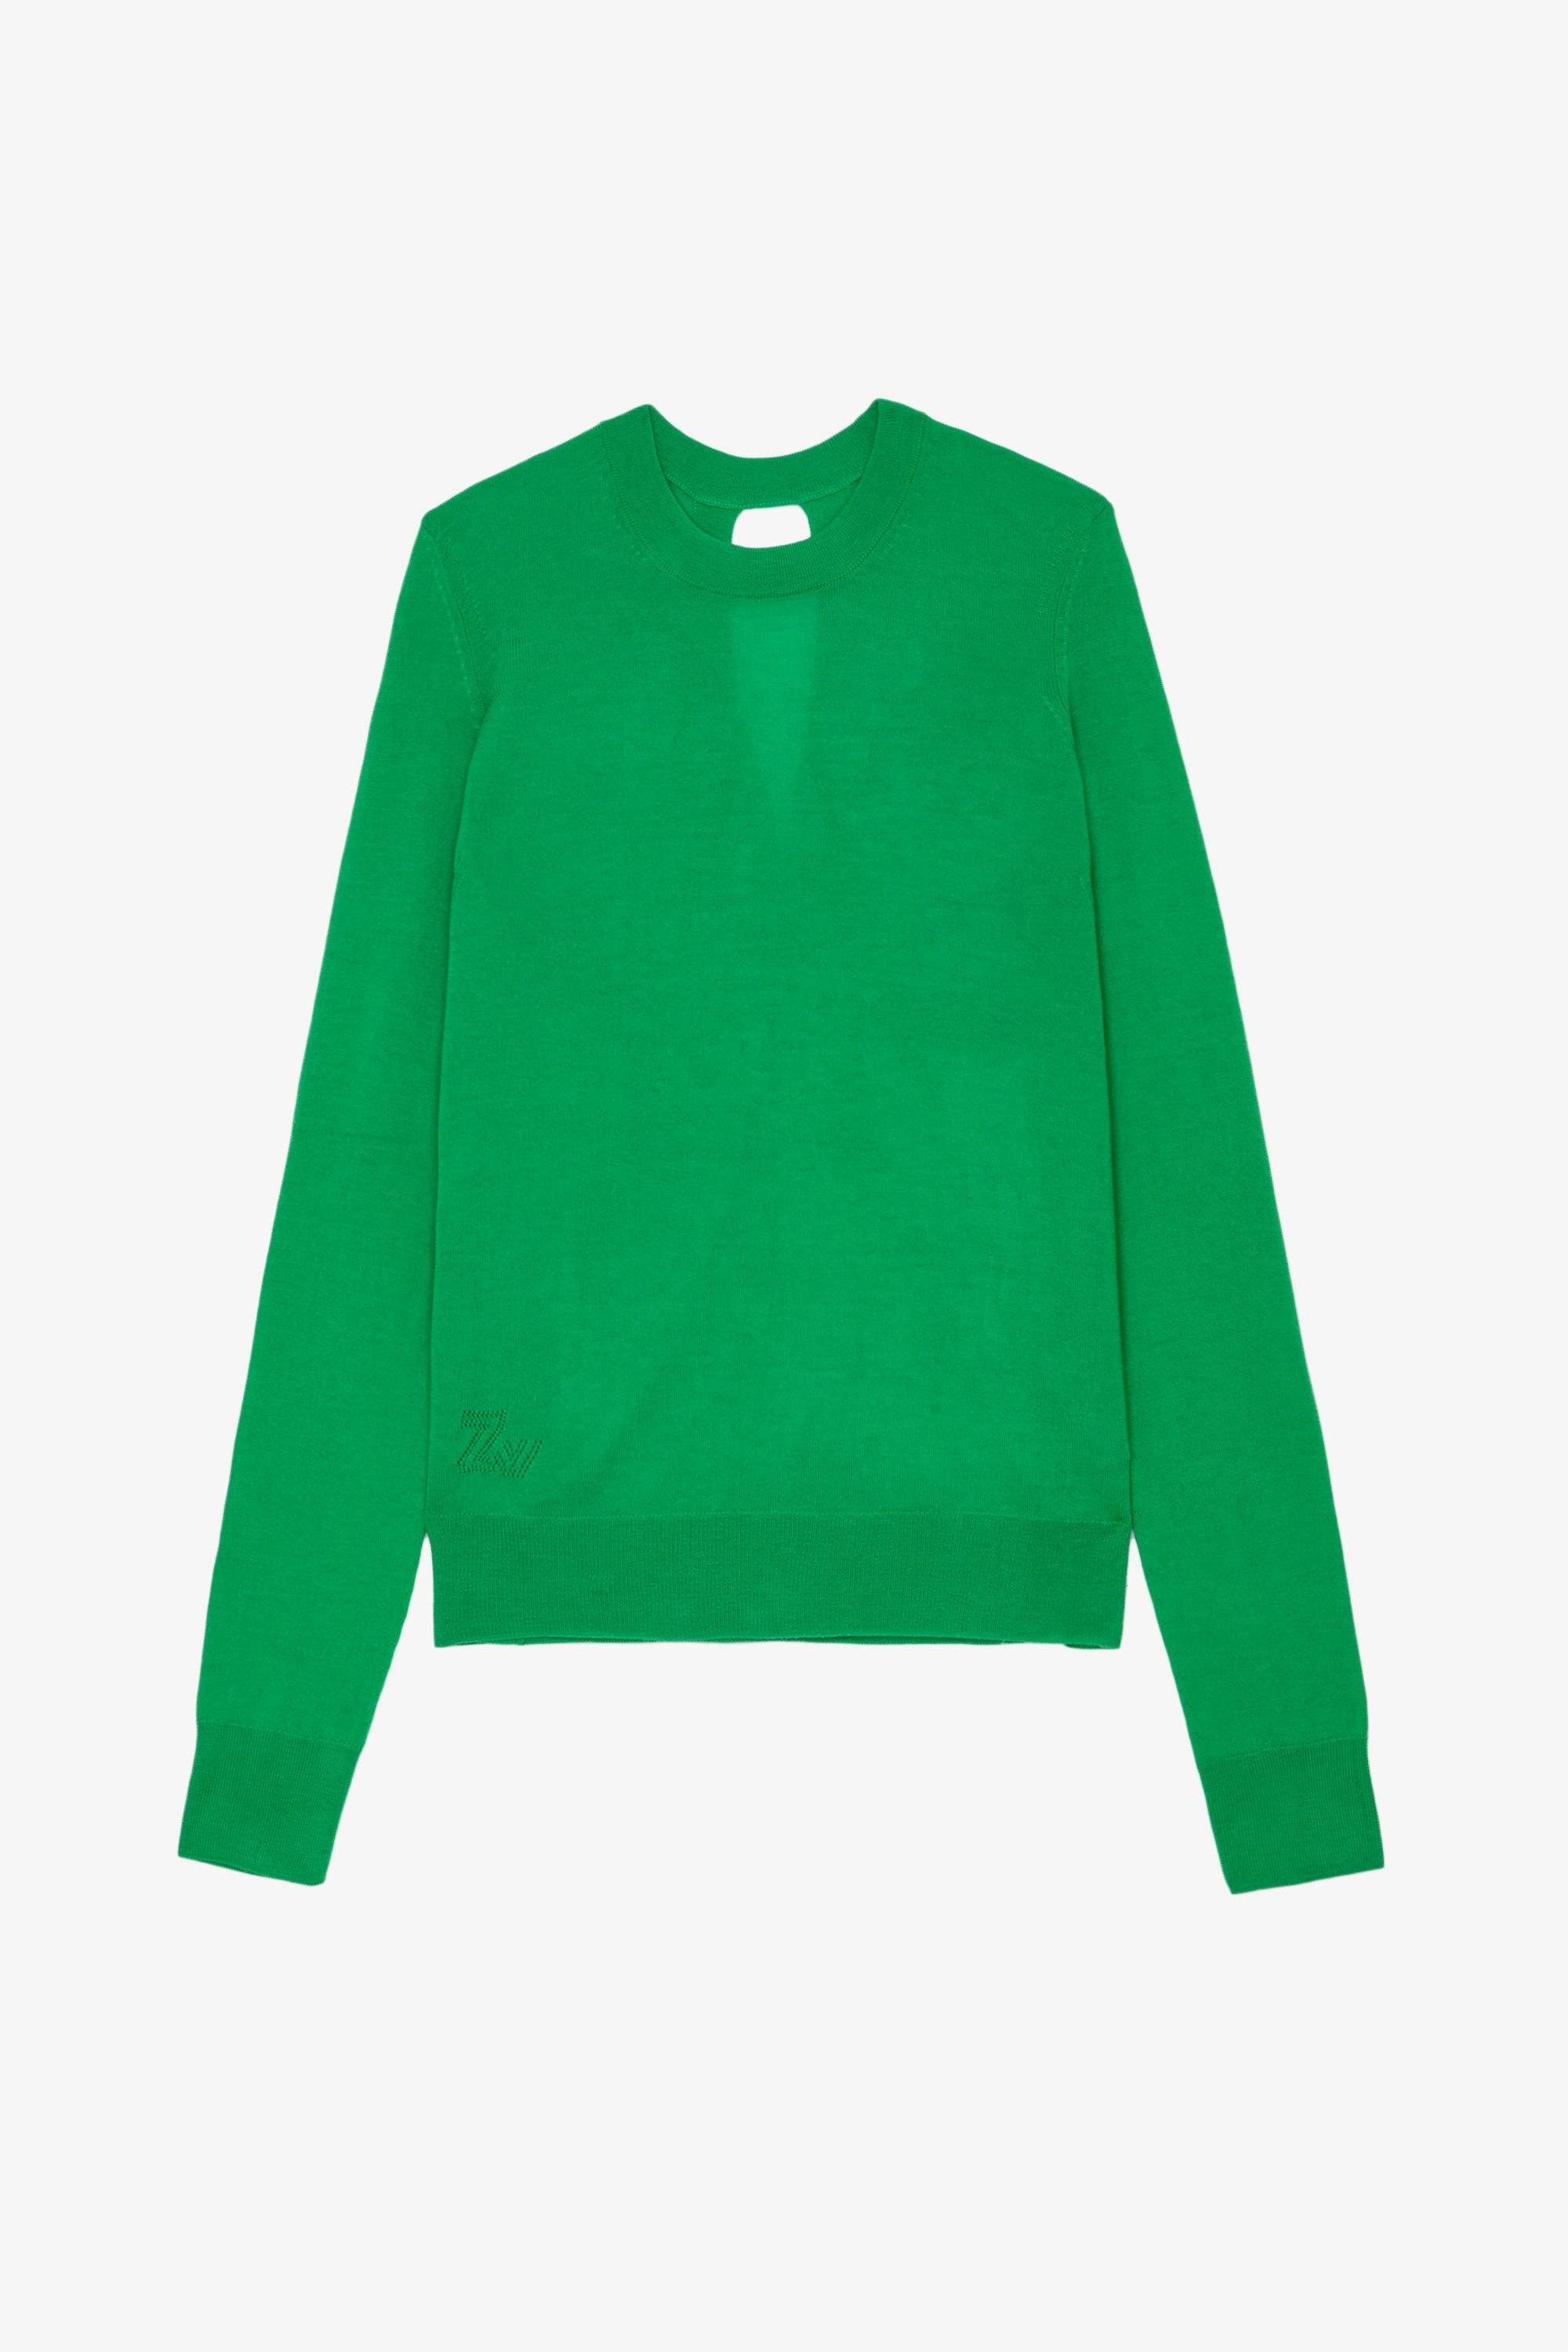 Emma Merinos Jumper Women’s green long-sleeved merino knit jumper with round neck and back slit